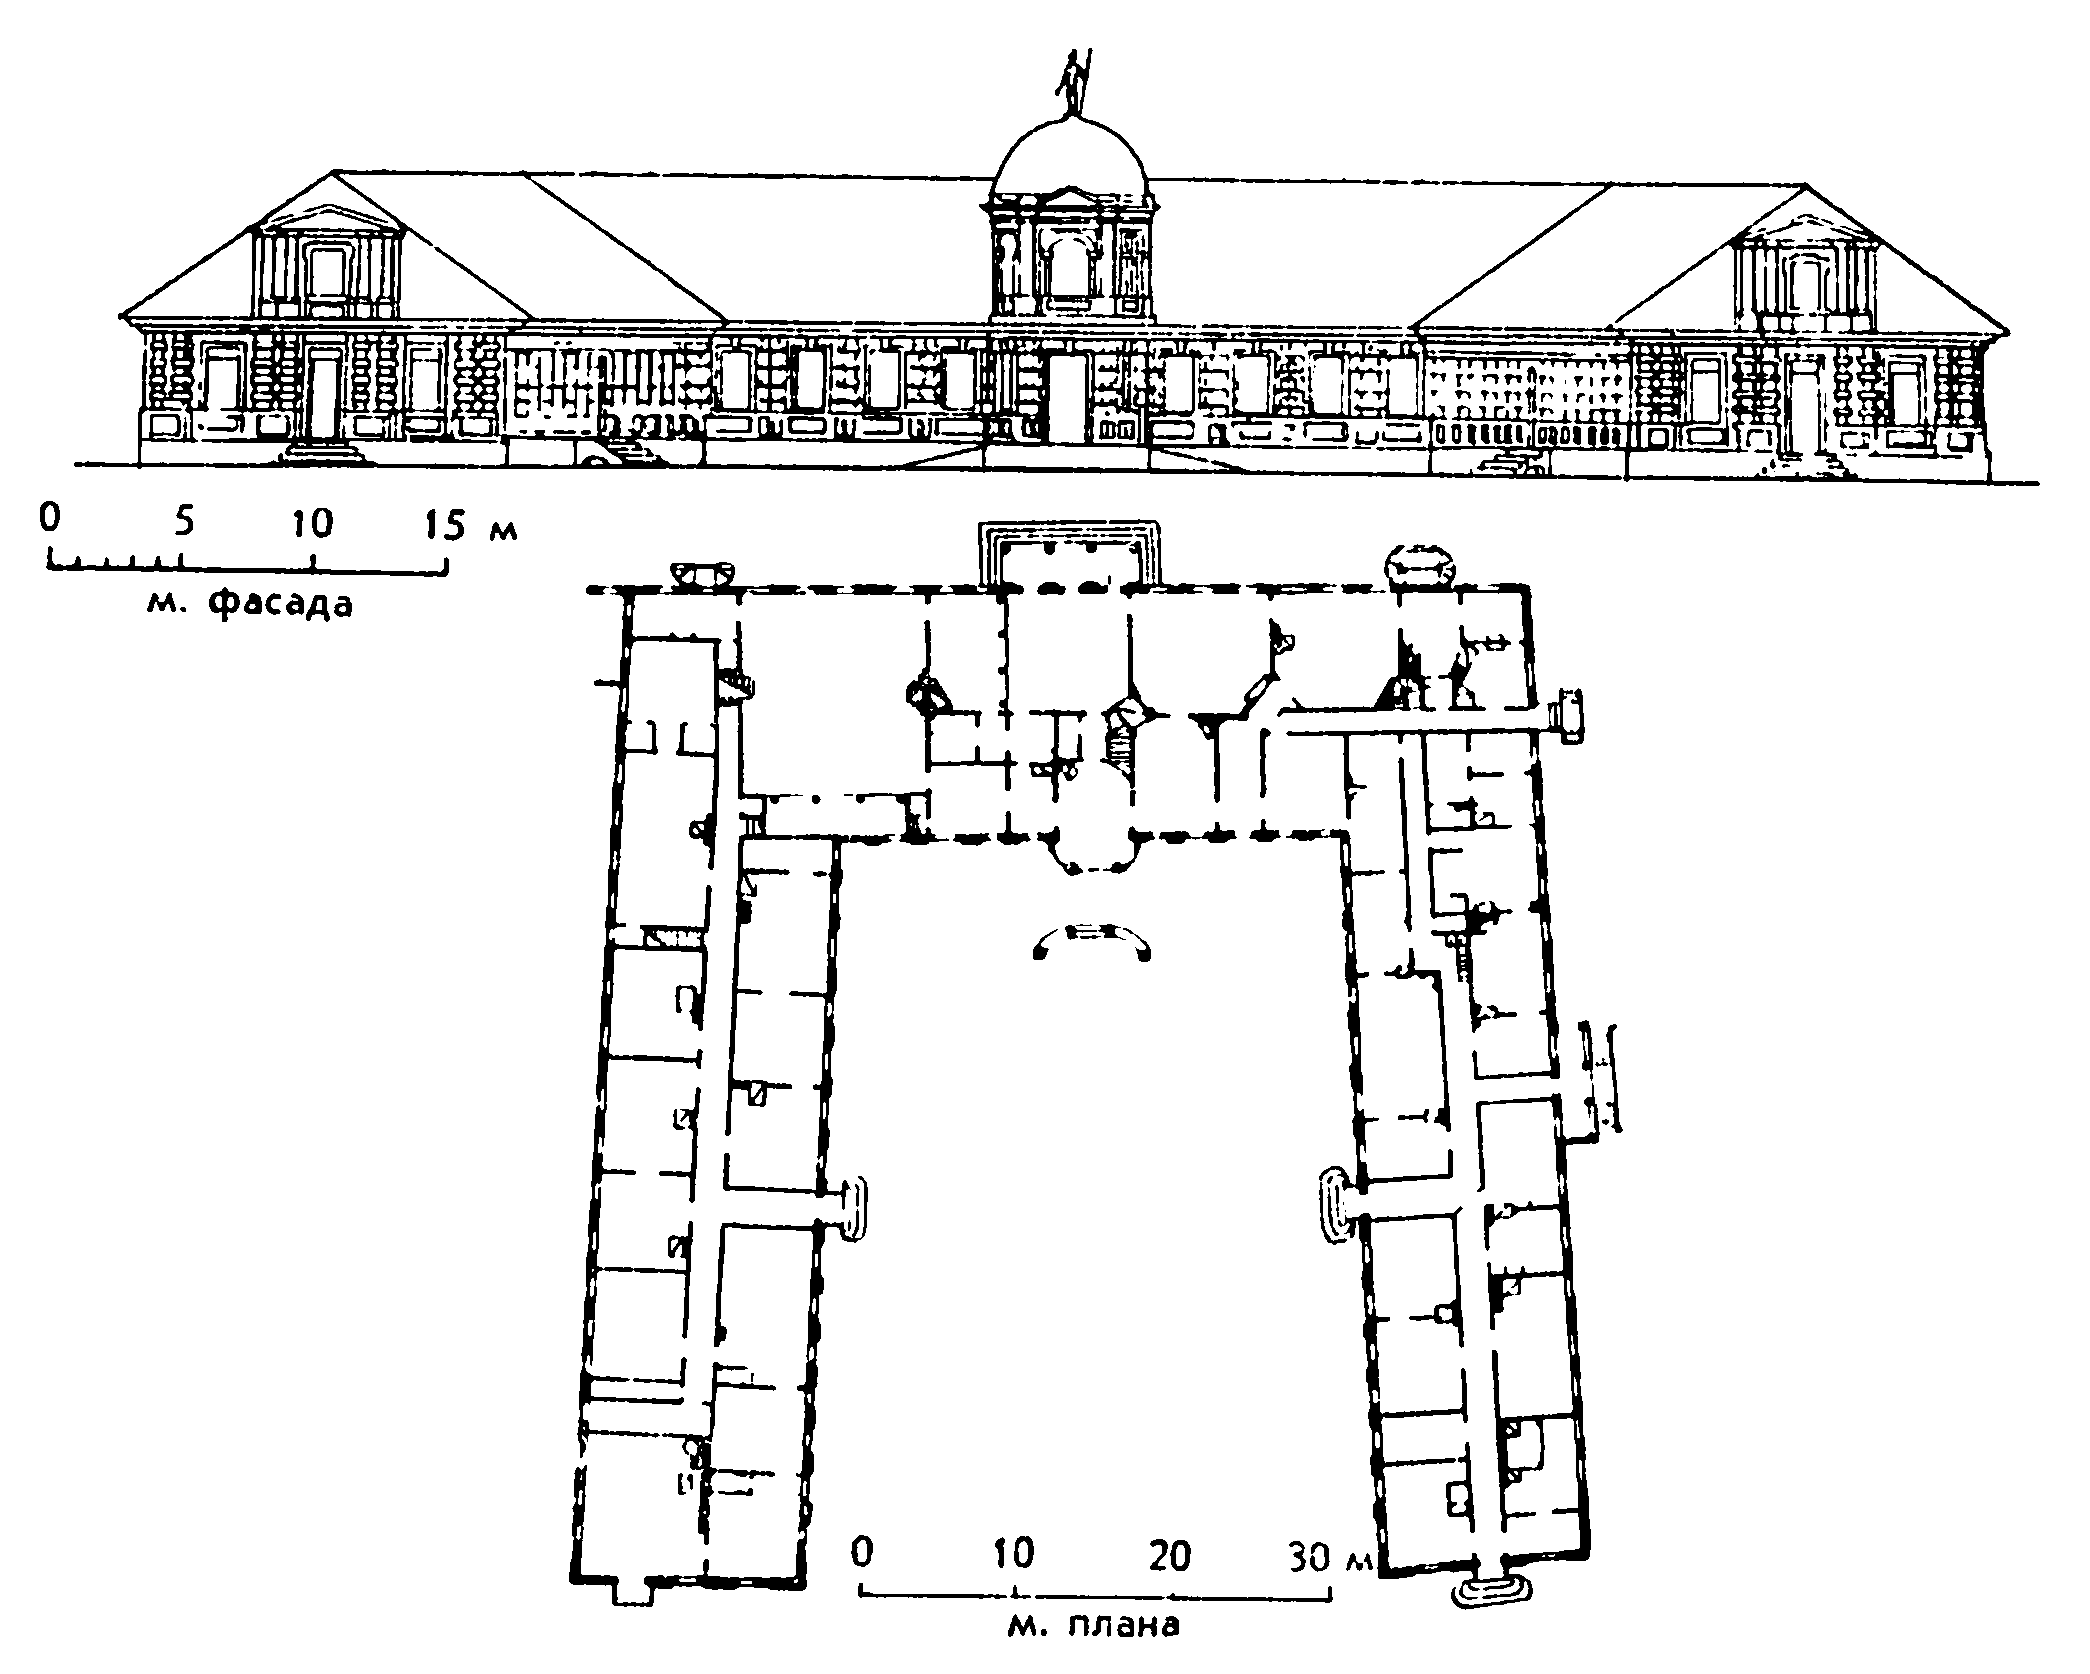 20. Гродно. Дворец Тызенгауза на Городнице, около 1765 г.